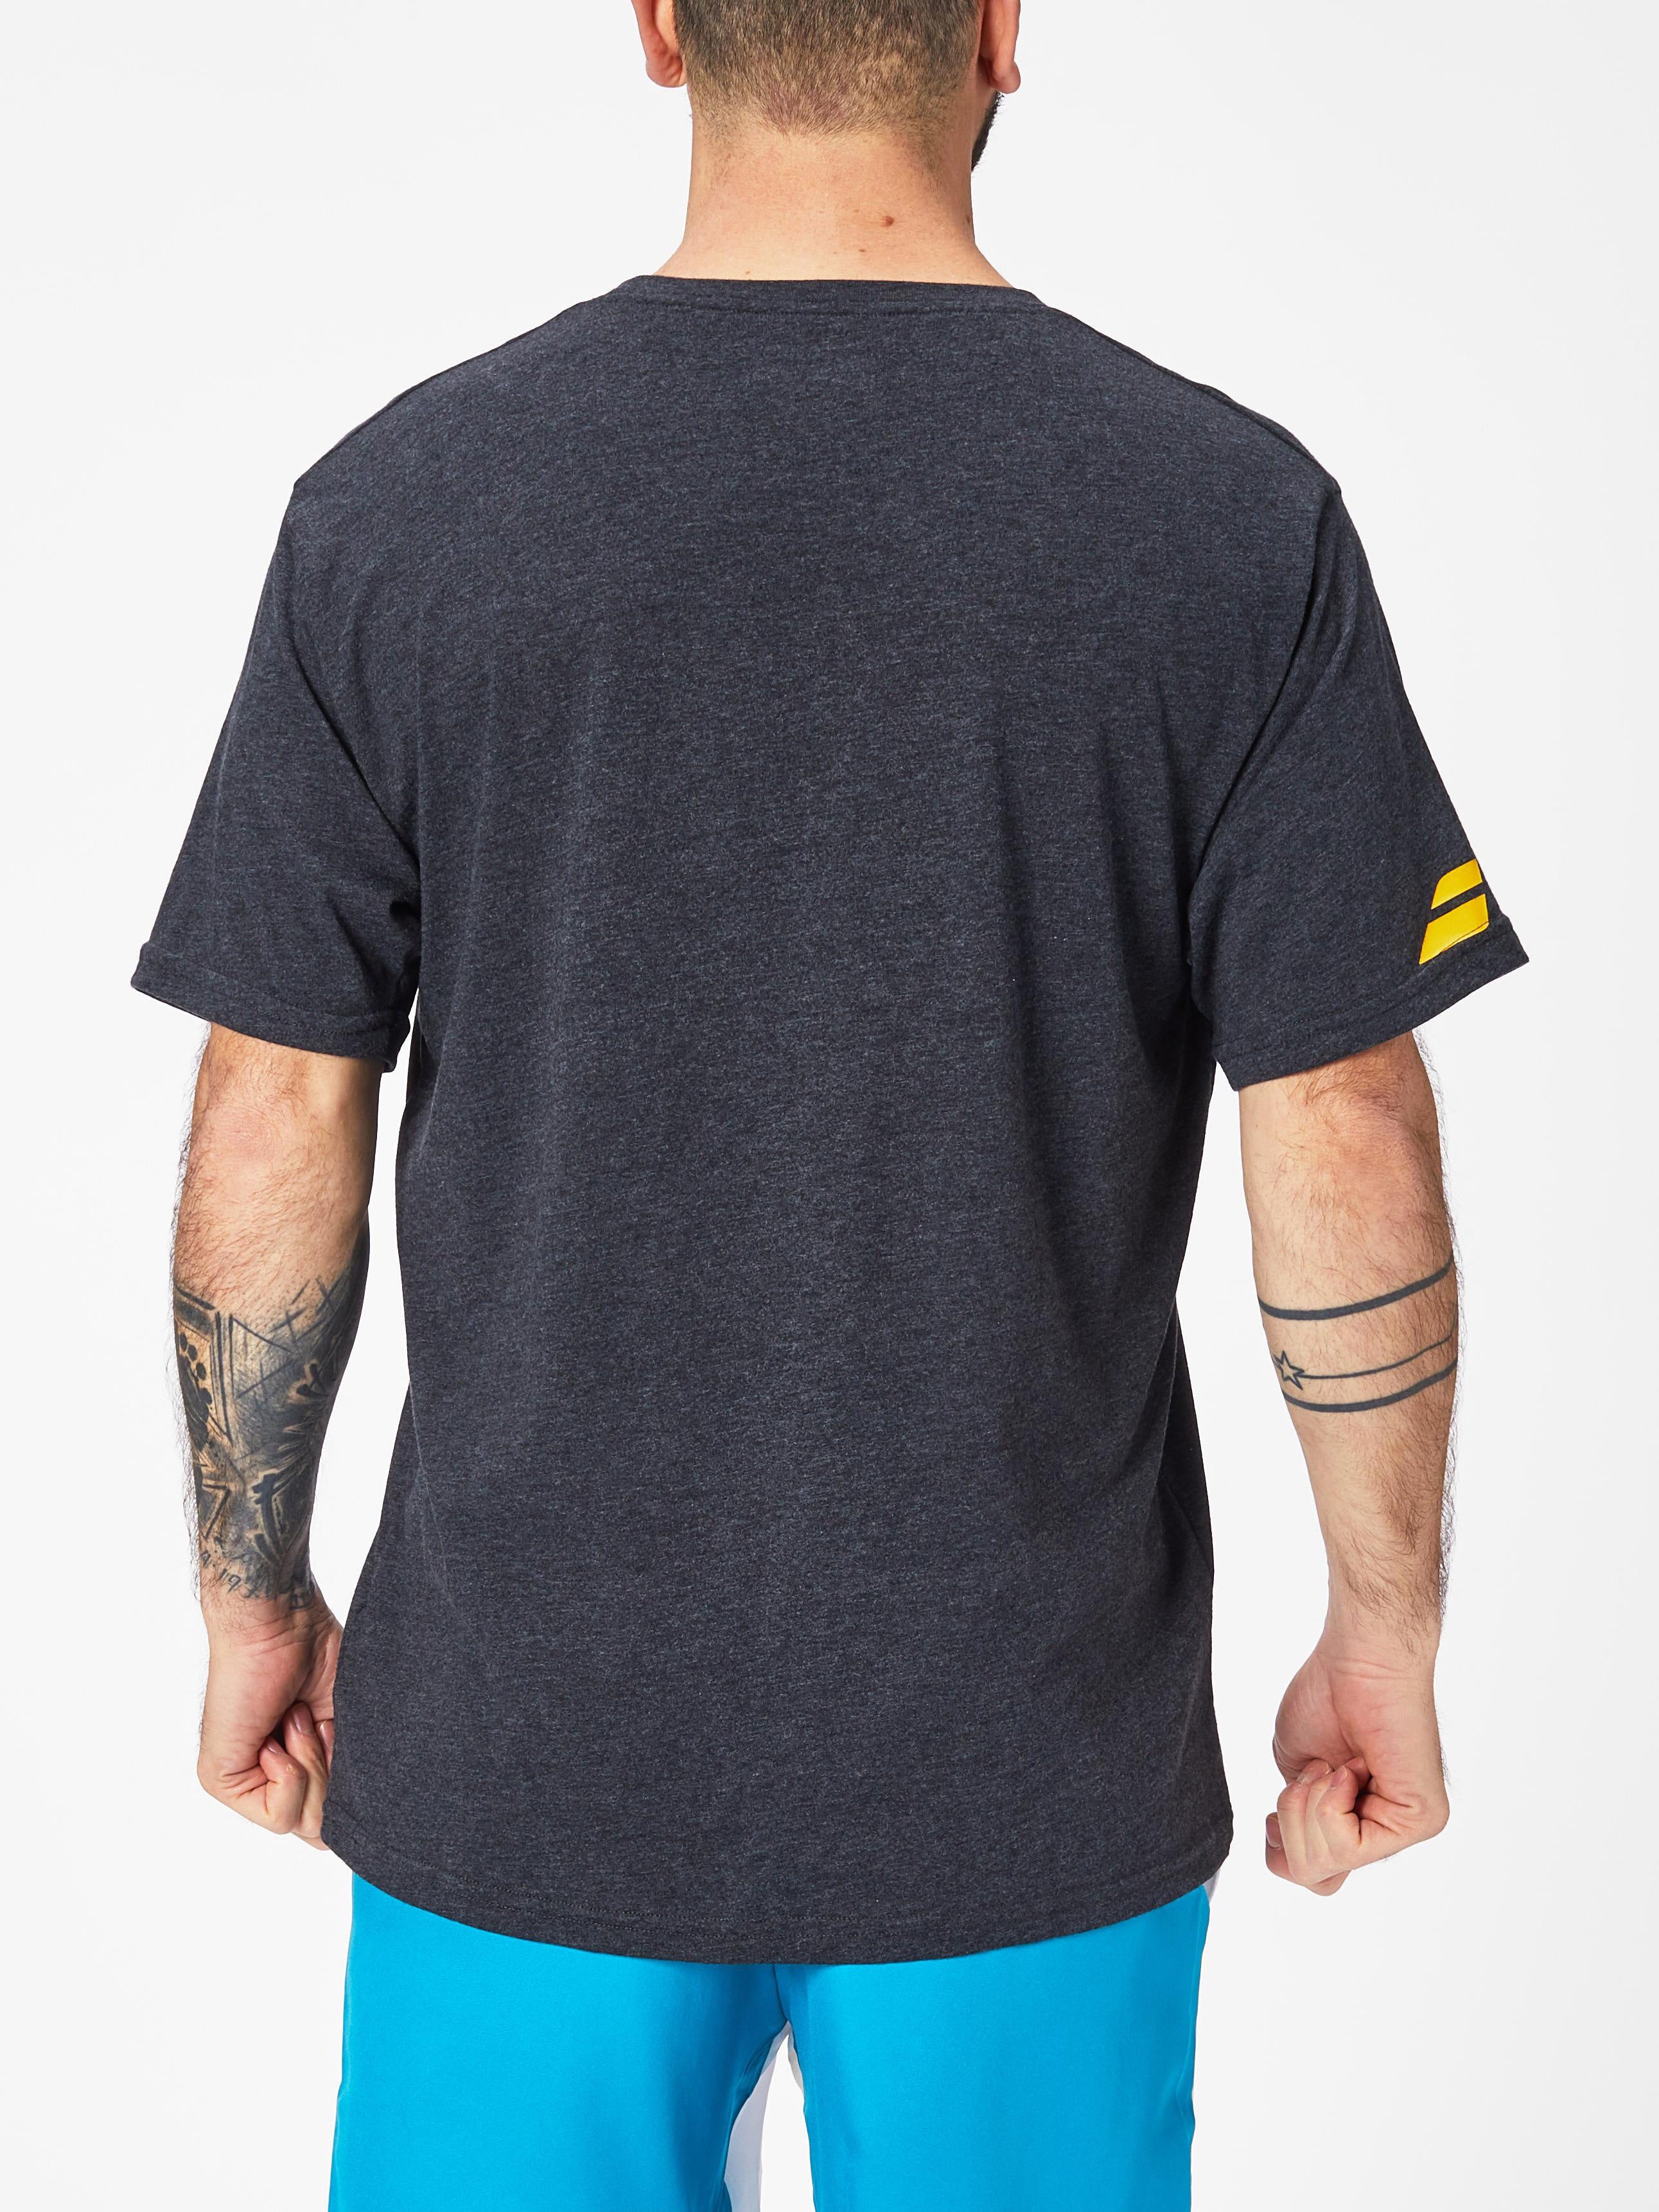 Babolat BABOLAT Mens Navy Blue Short Sleeve Tennis Sports T Shirt Tee Size S 